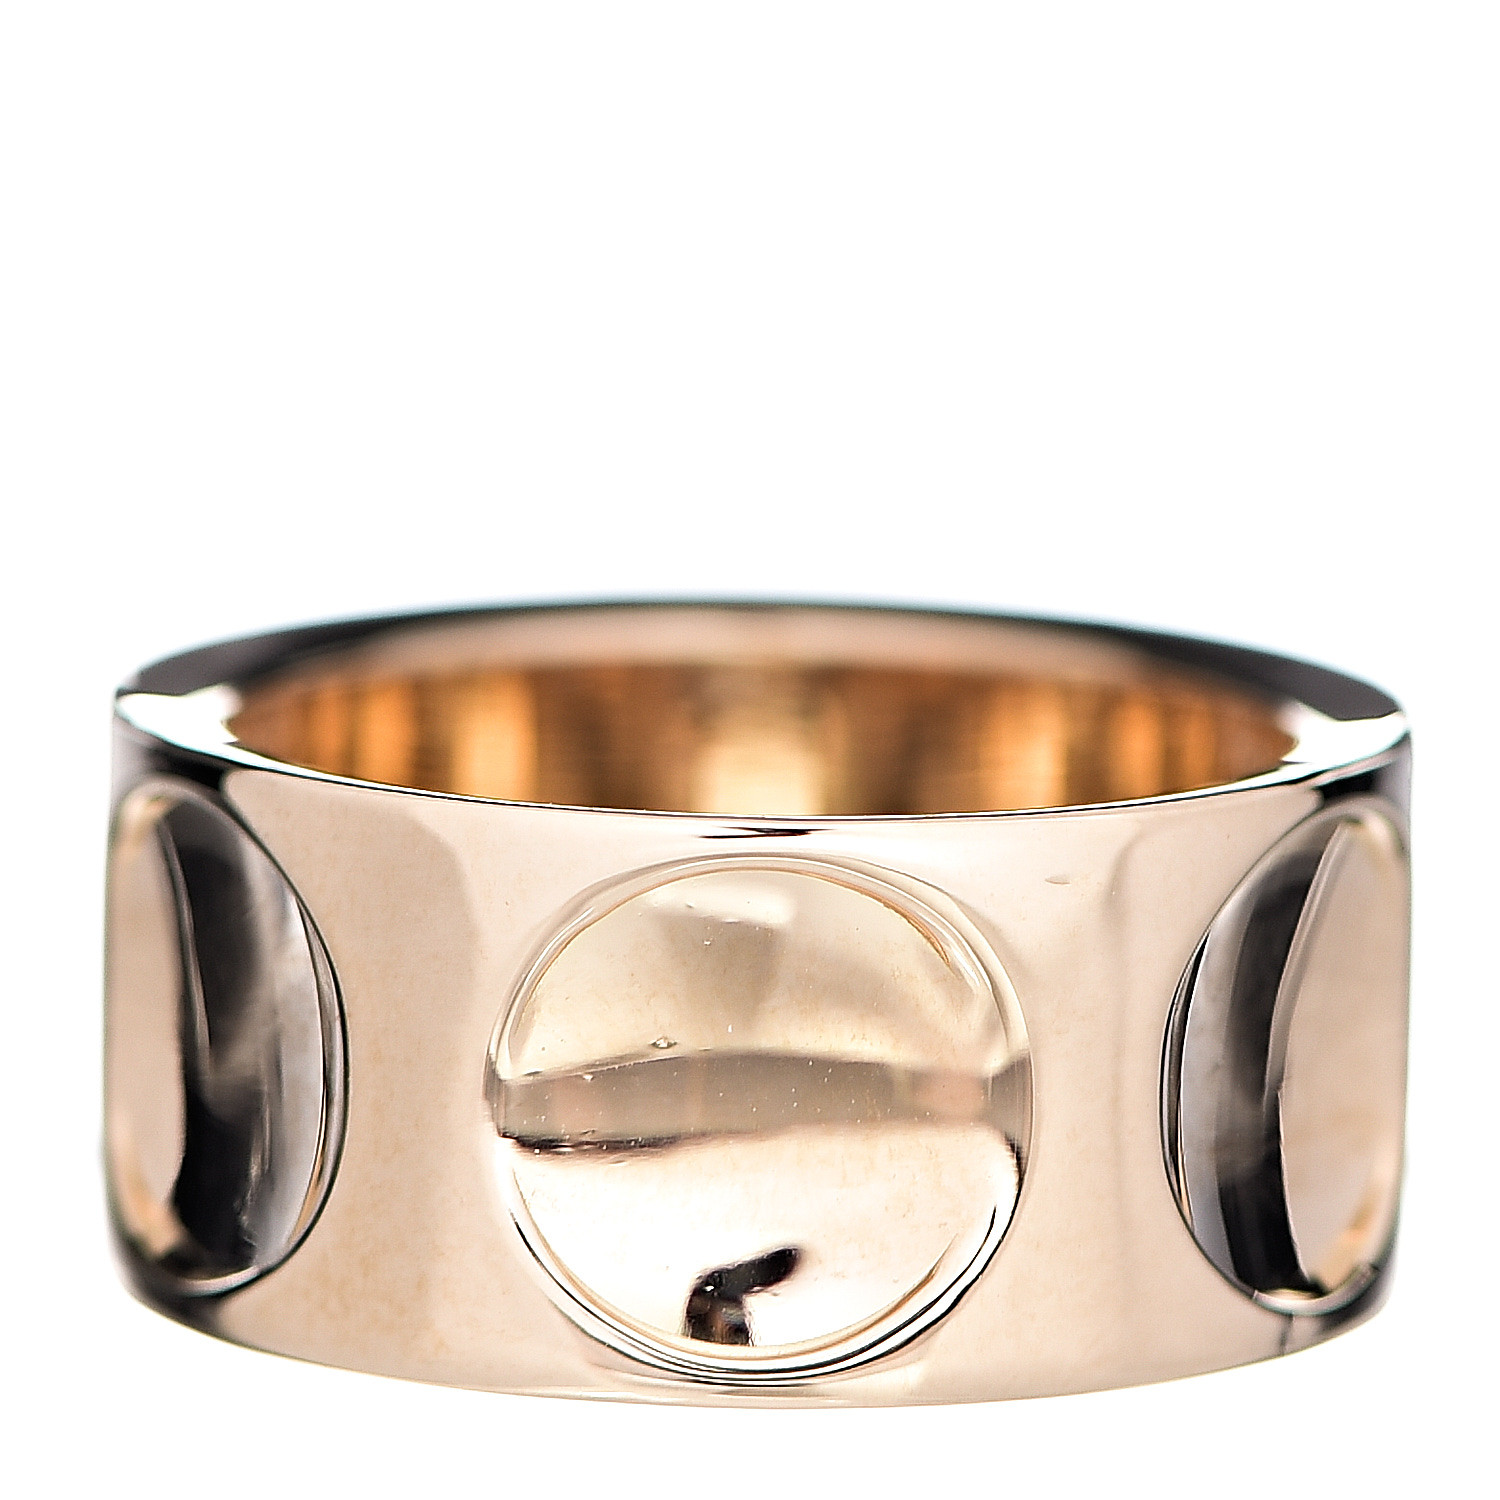 Louis Vuitton Empreinte Large Ring, White Gold Grey. Size 47